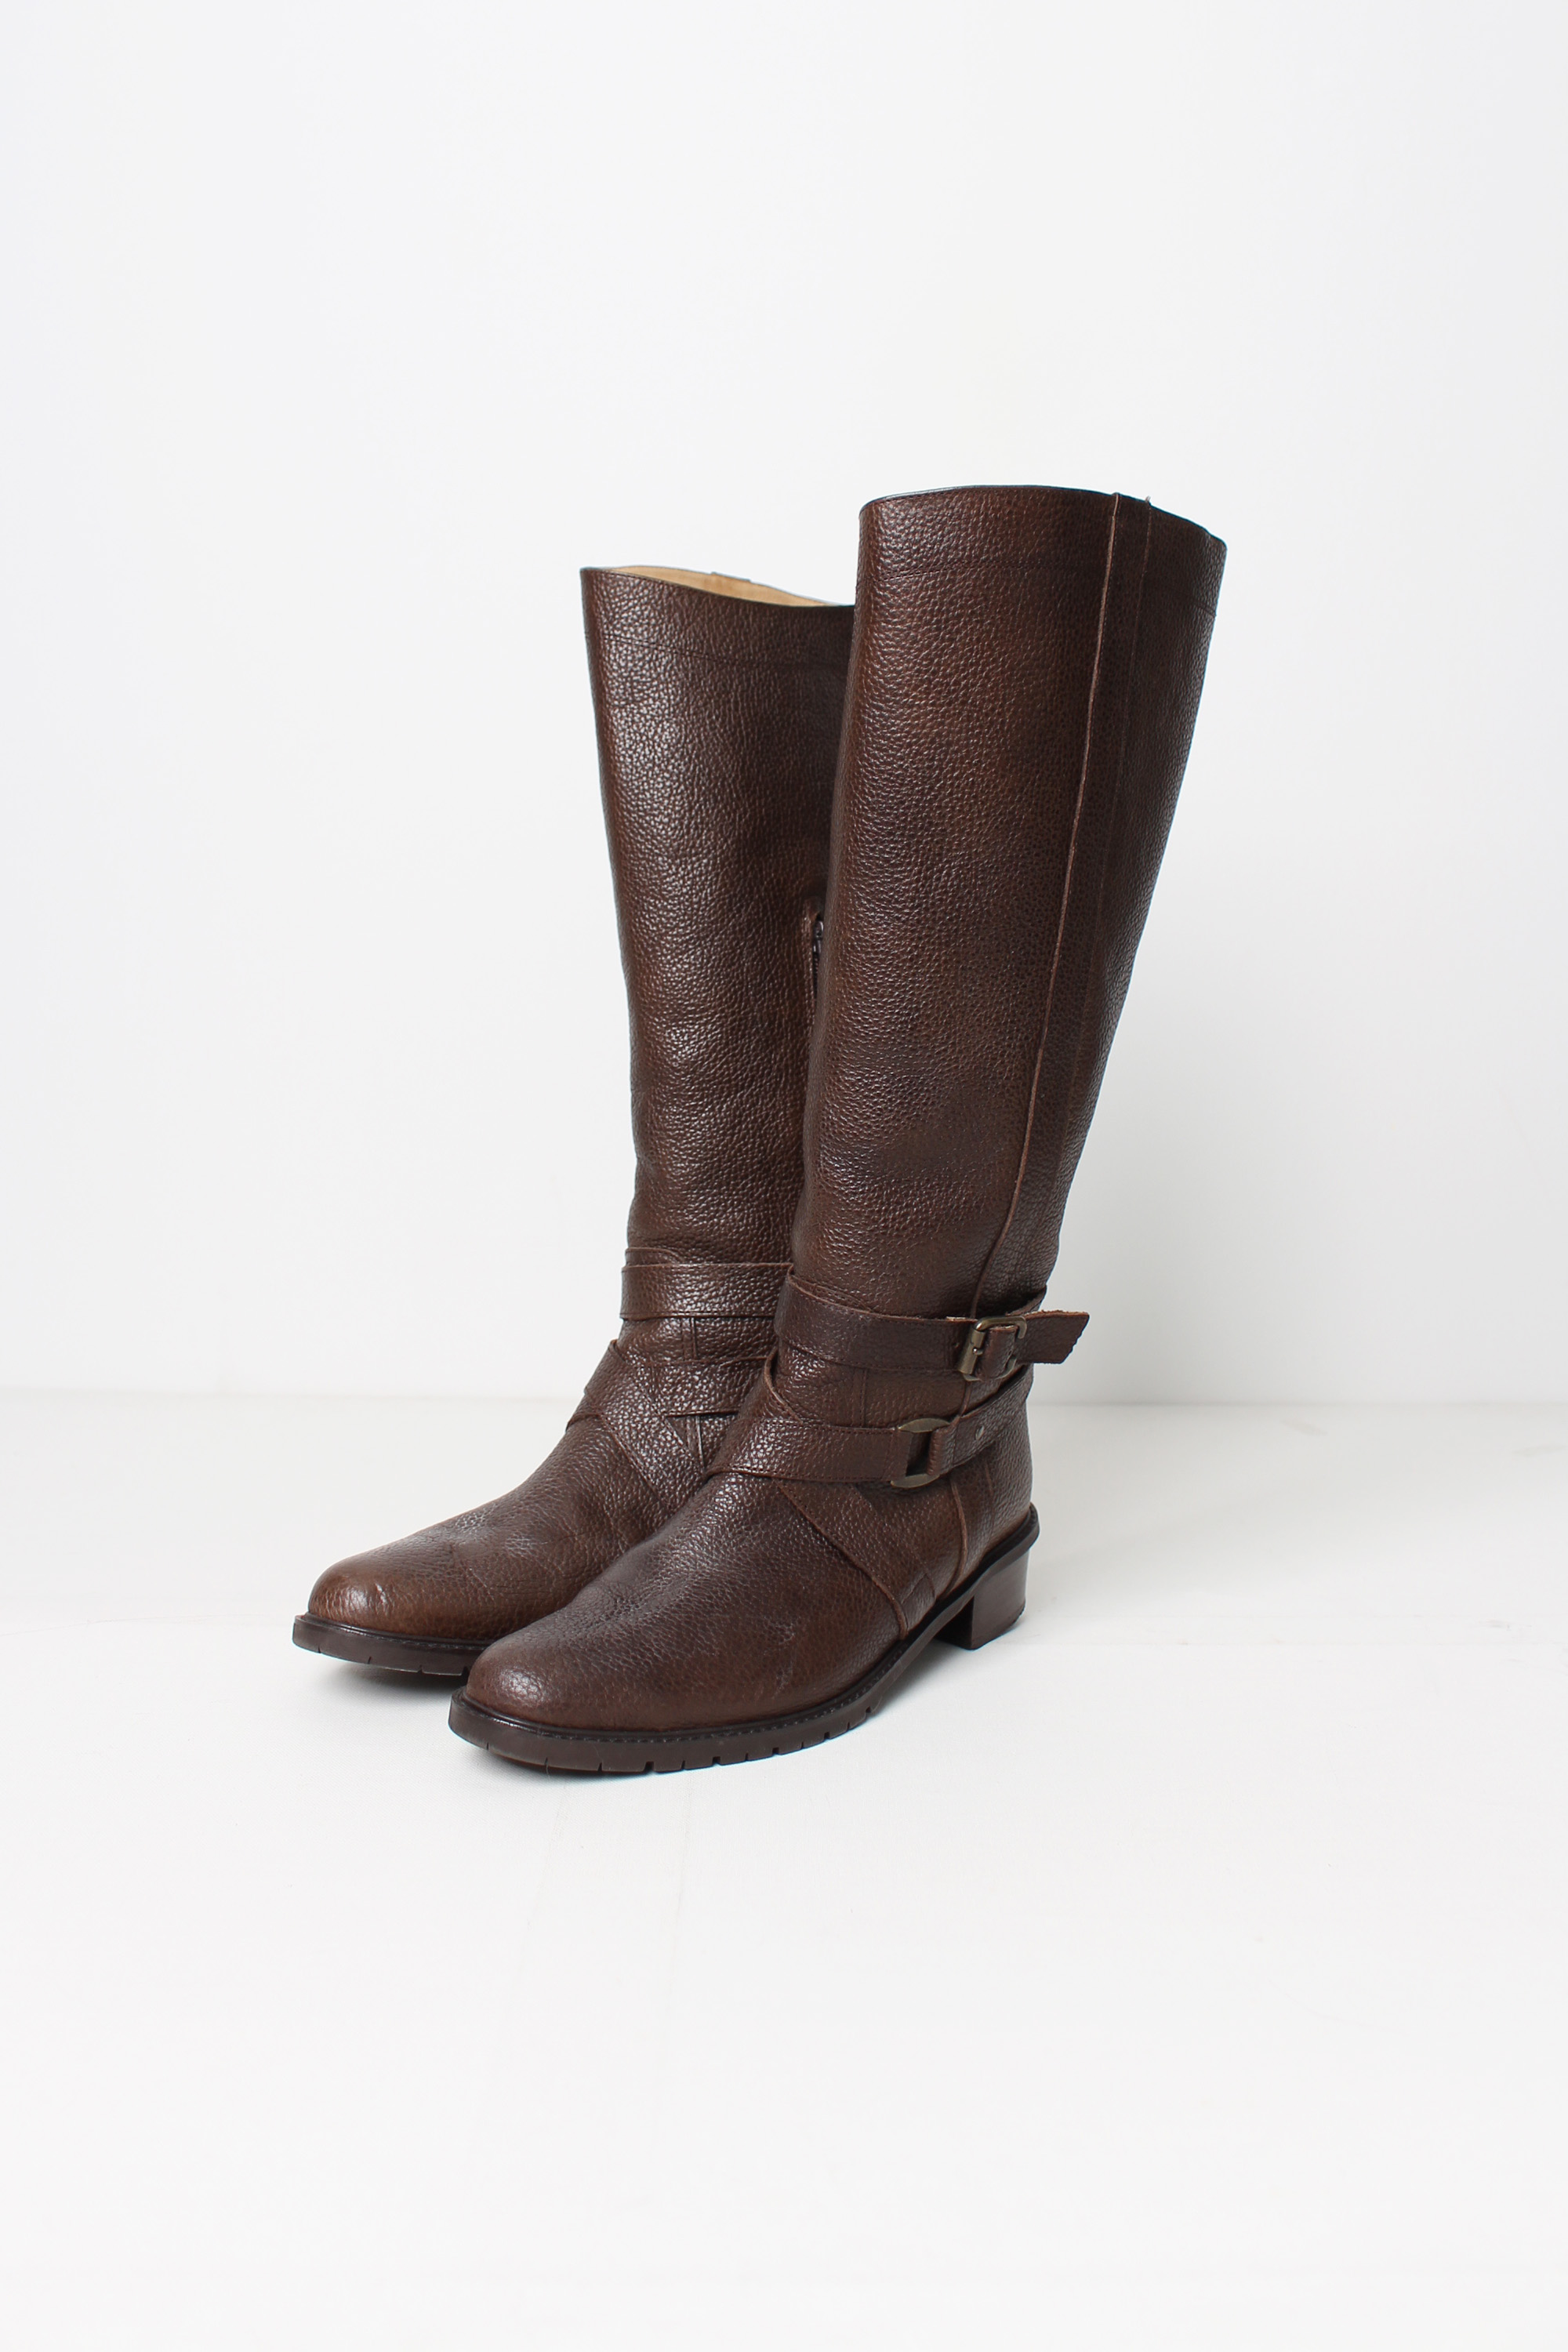 DAMA Grain Leather boots